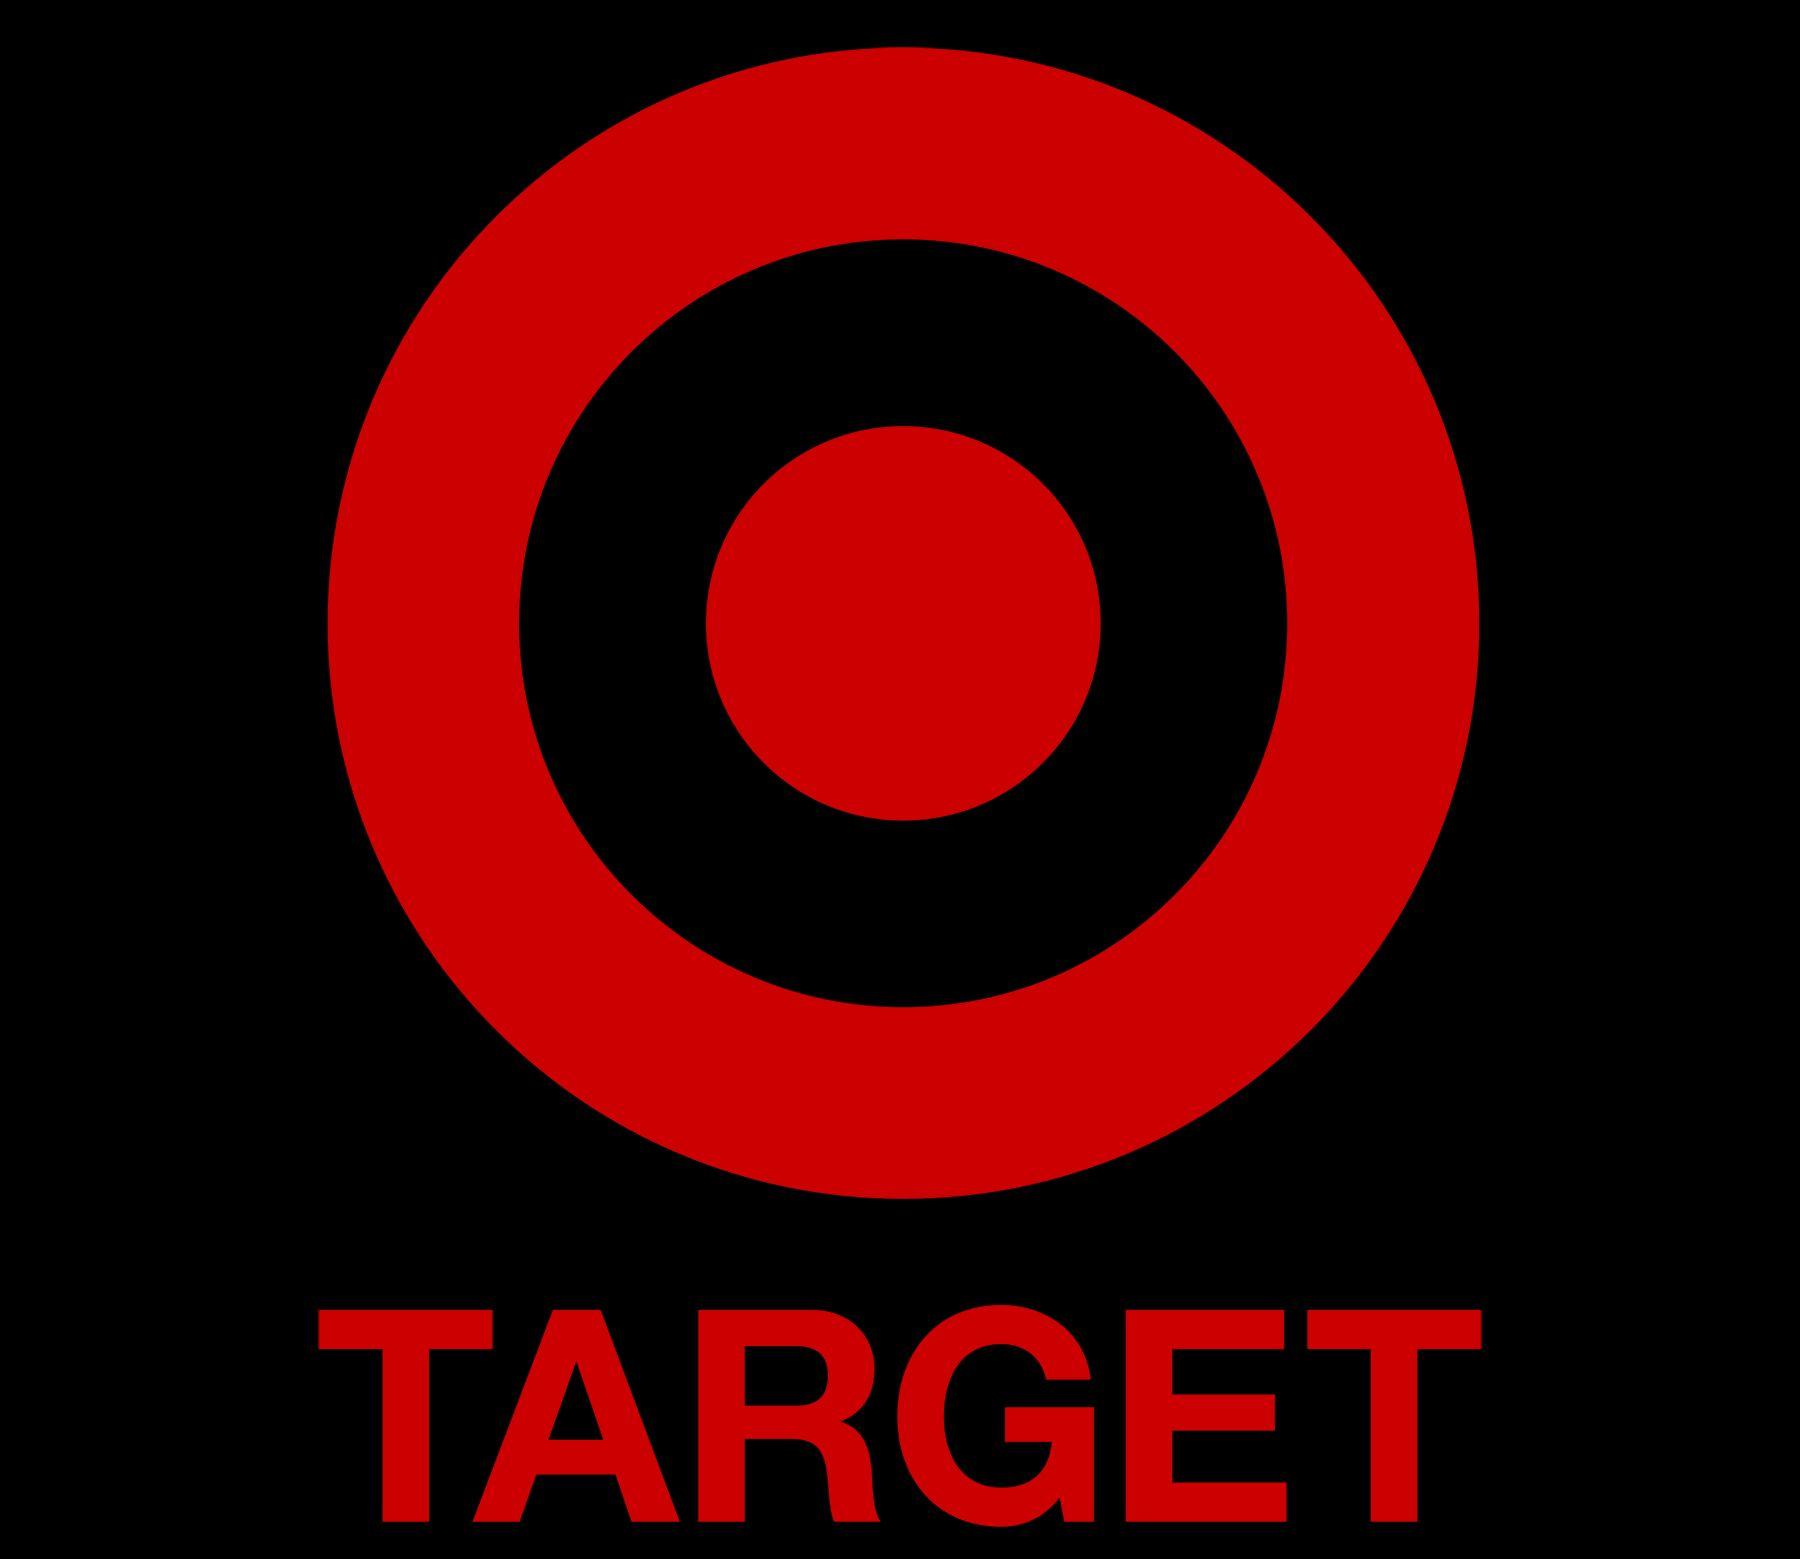 Target Company Logo - Target Logo, Target Symbol, Meaning, History and Evolution